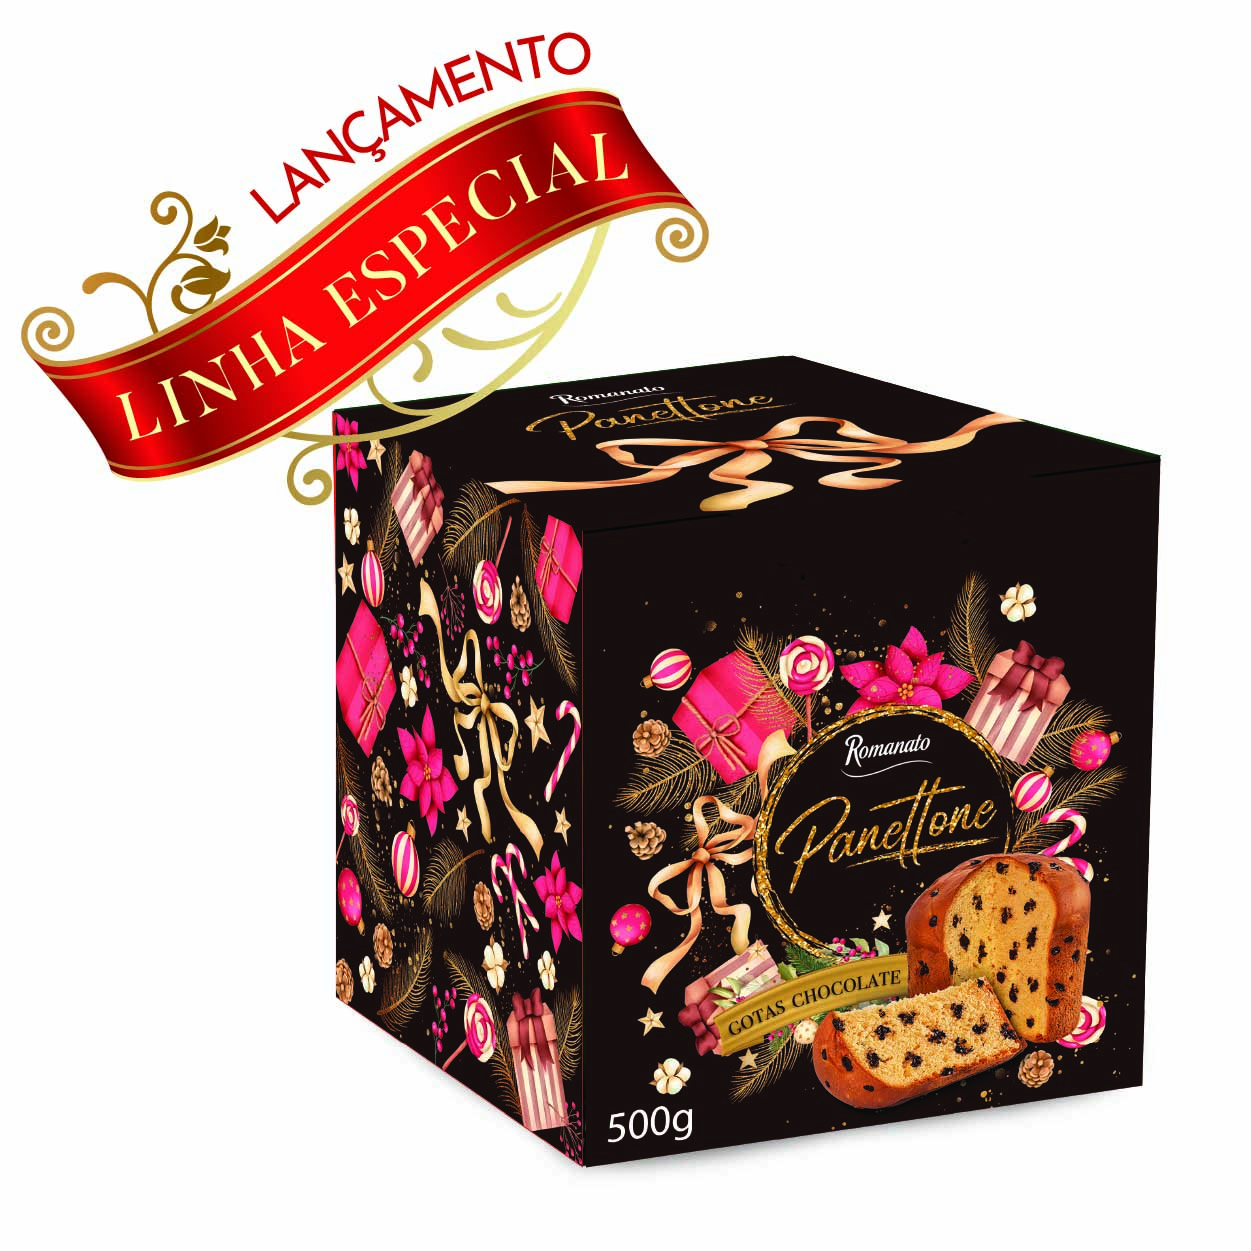 Panettone Goumert Gotas Chocolate Belga Legitimo Fofinho Org